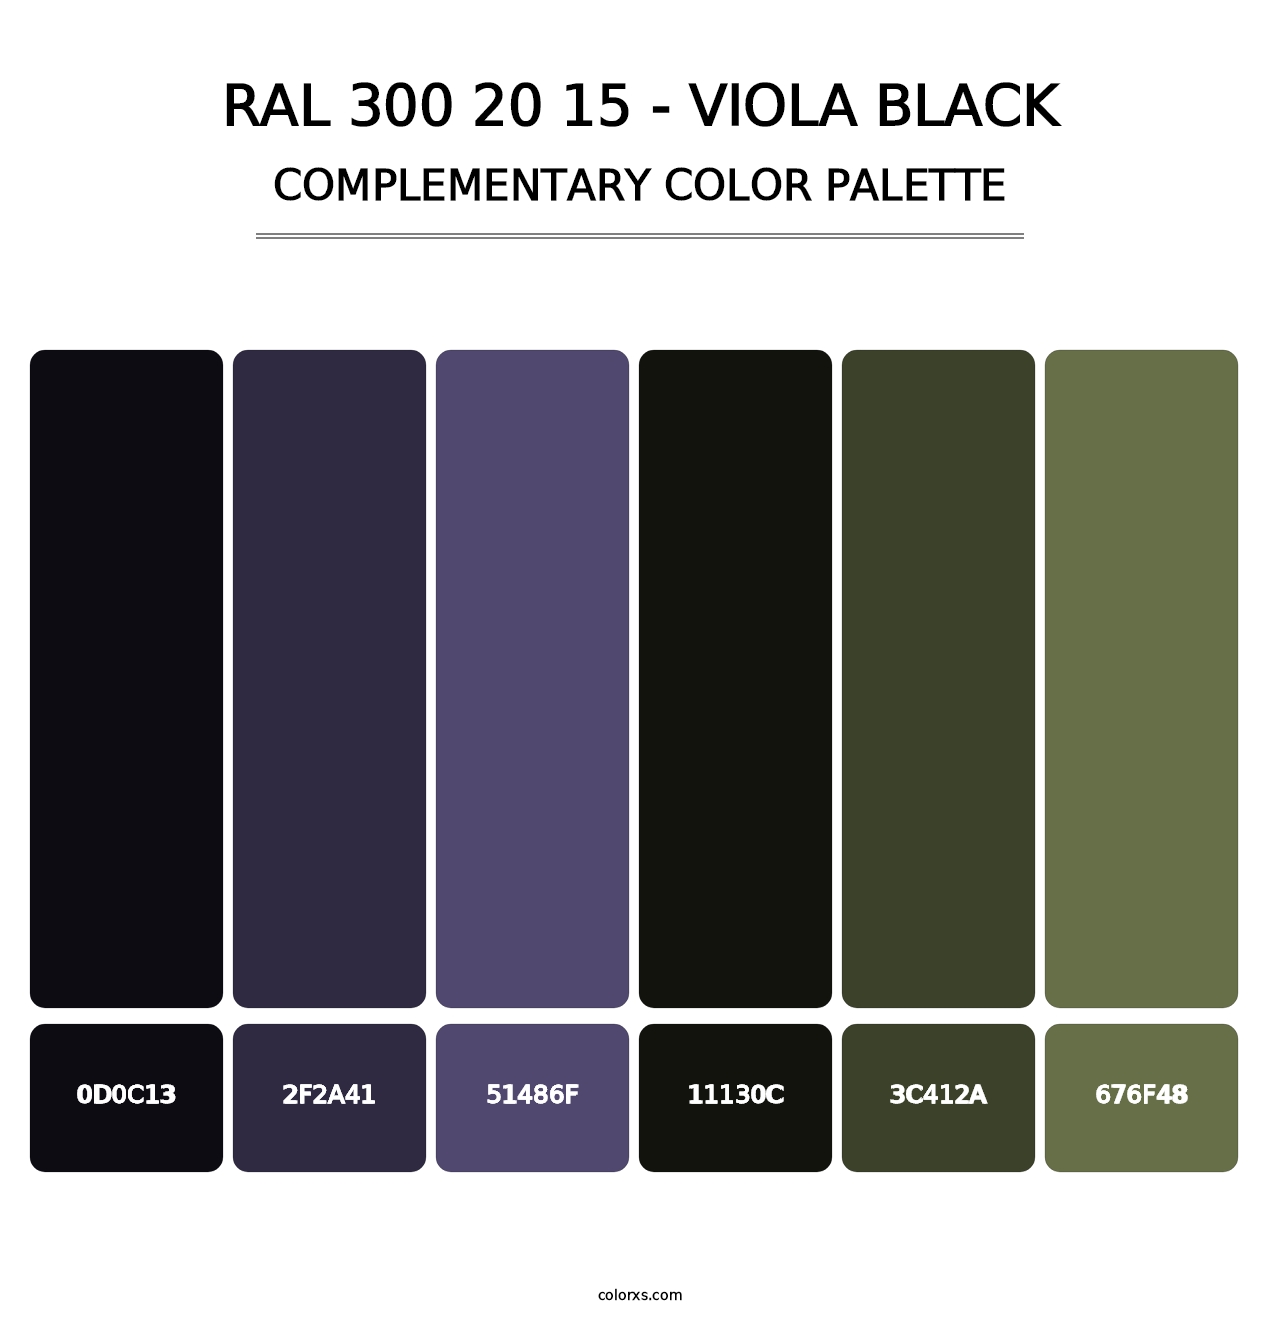 RAL 300 20 15 - Viola Black - Complementary Color Palette